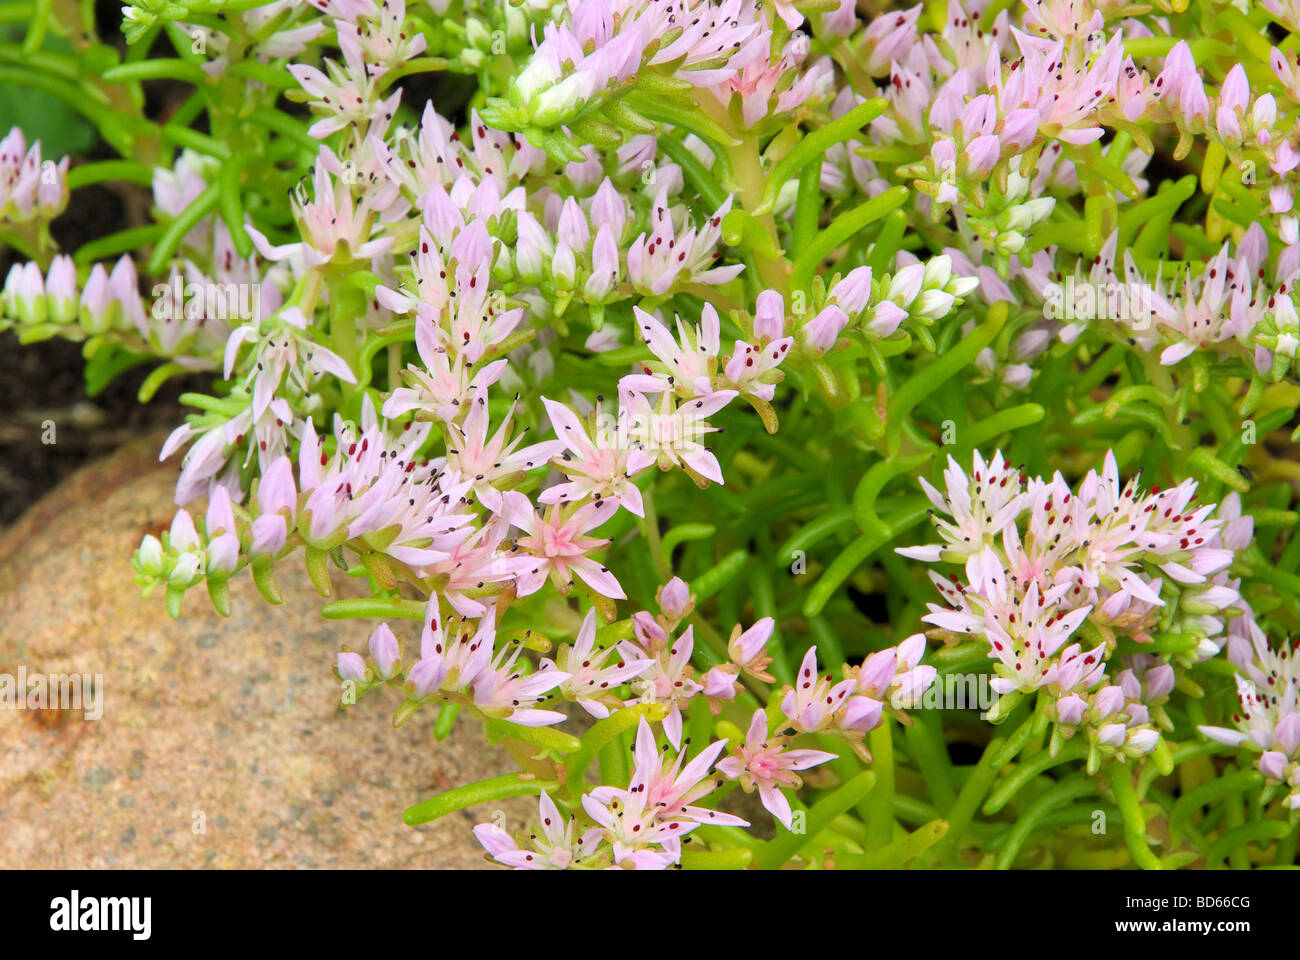 Seestern Blume seastar flower 02 Stock Photo